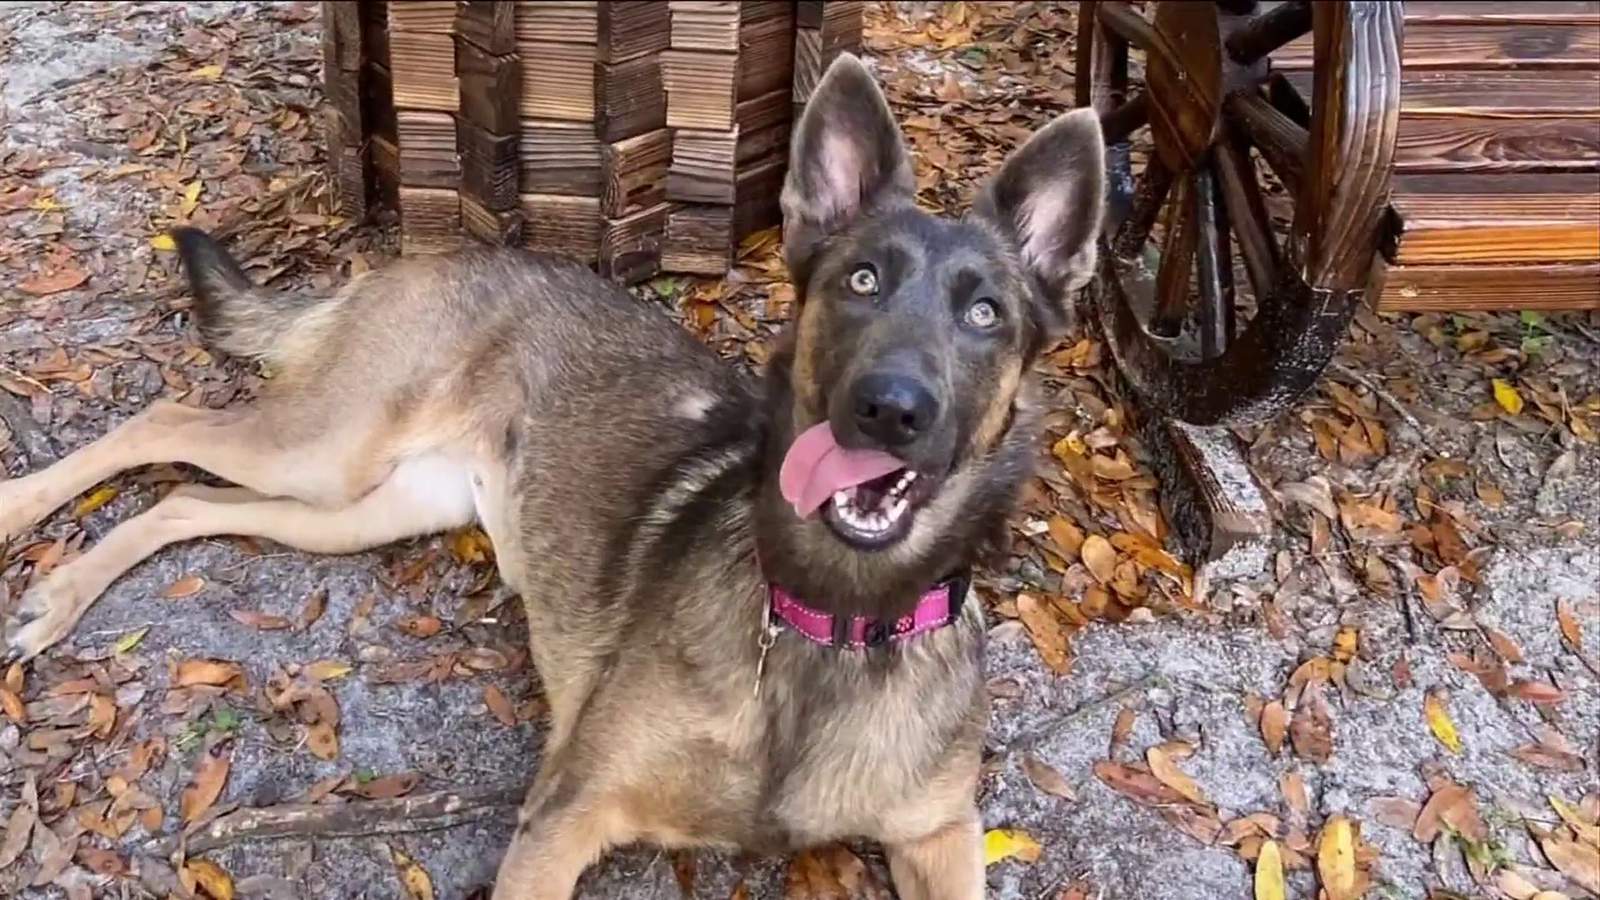 Missing German shepherd found deceased in Clay County, Rescue organization said